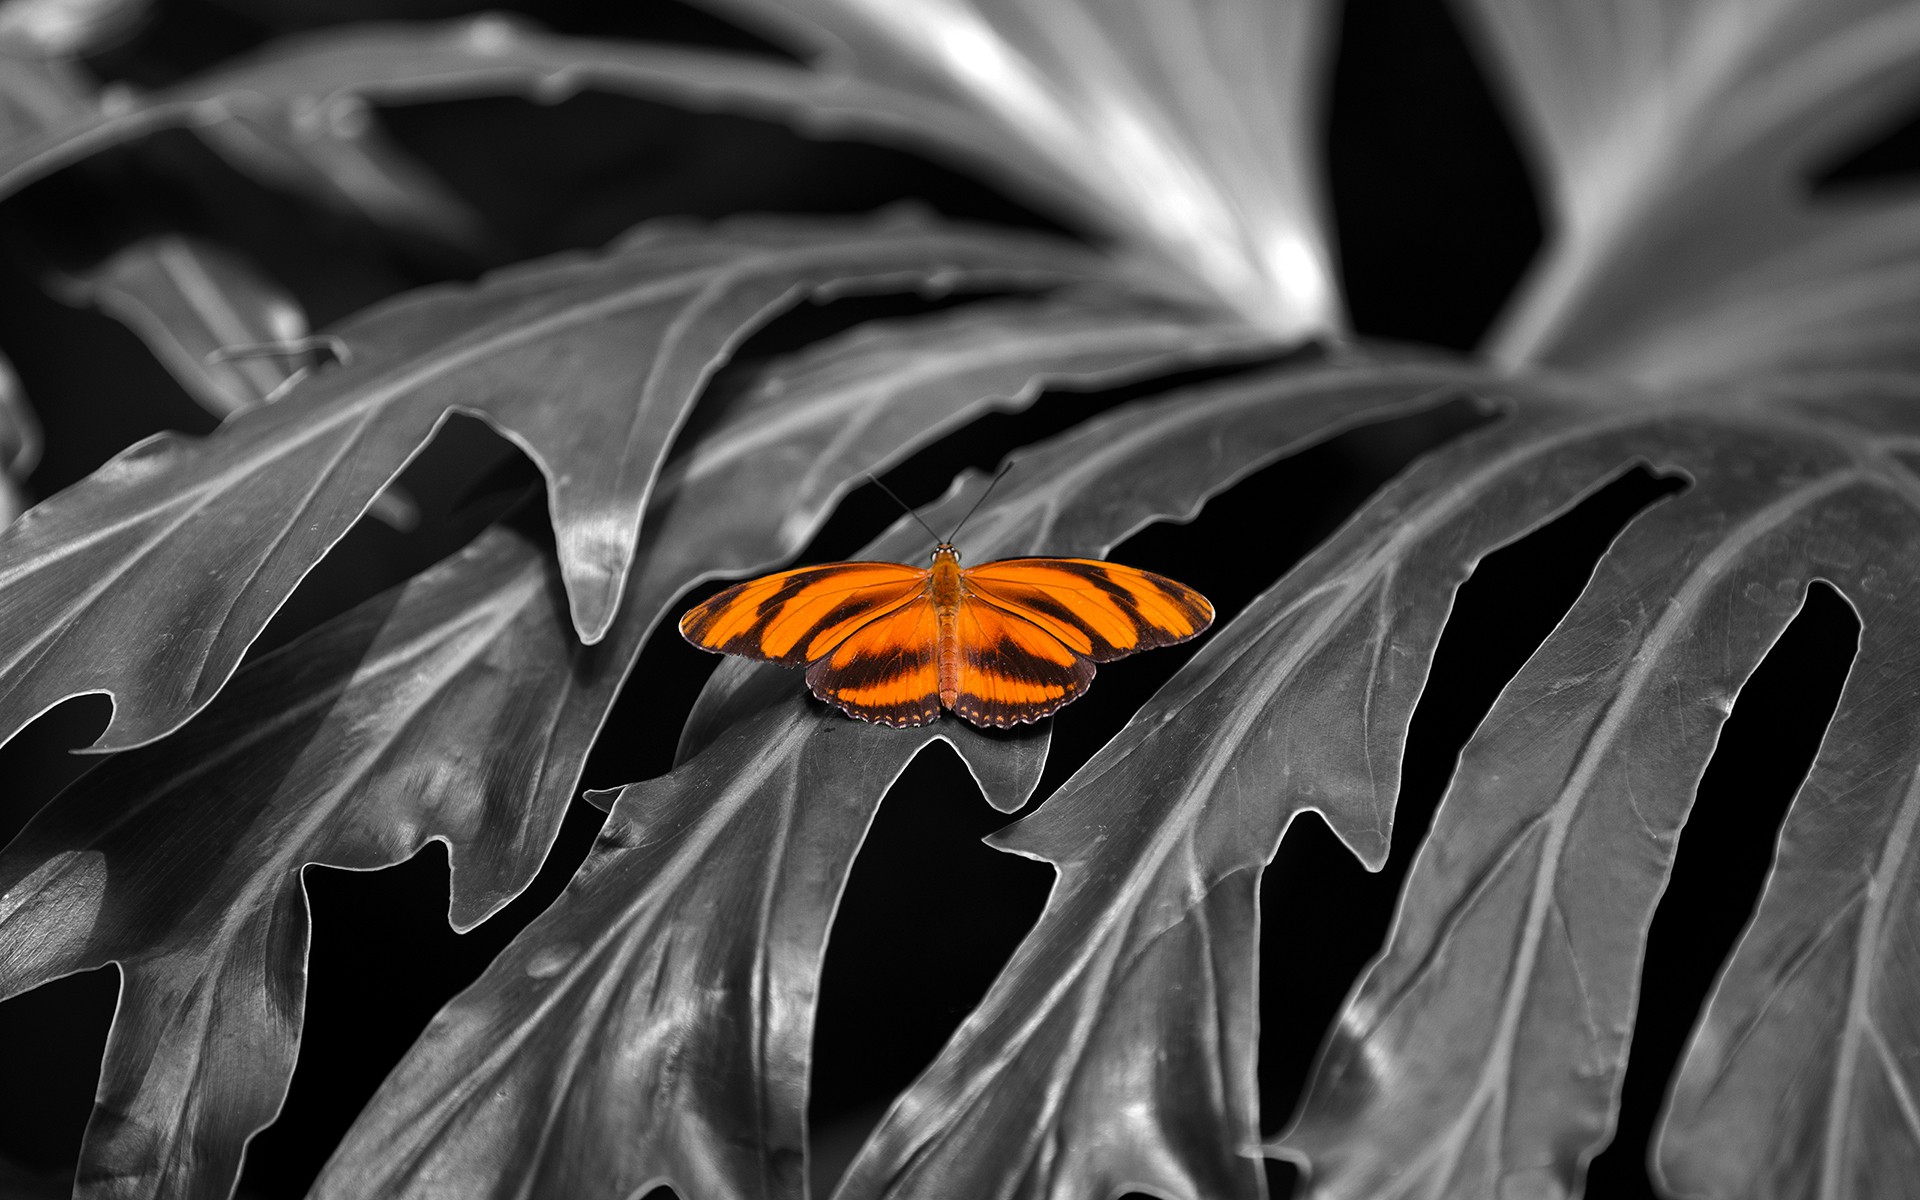 Цветок похож на крылья бабочки. Бабочка лист. Цветок напоминающий Крылья бабочки. Насекомое бабочка в стиле Хэллоуин. Бабочка на листочке.